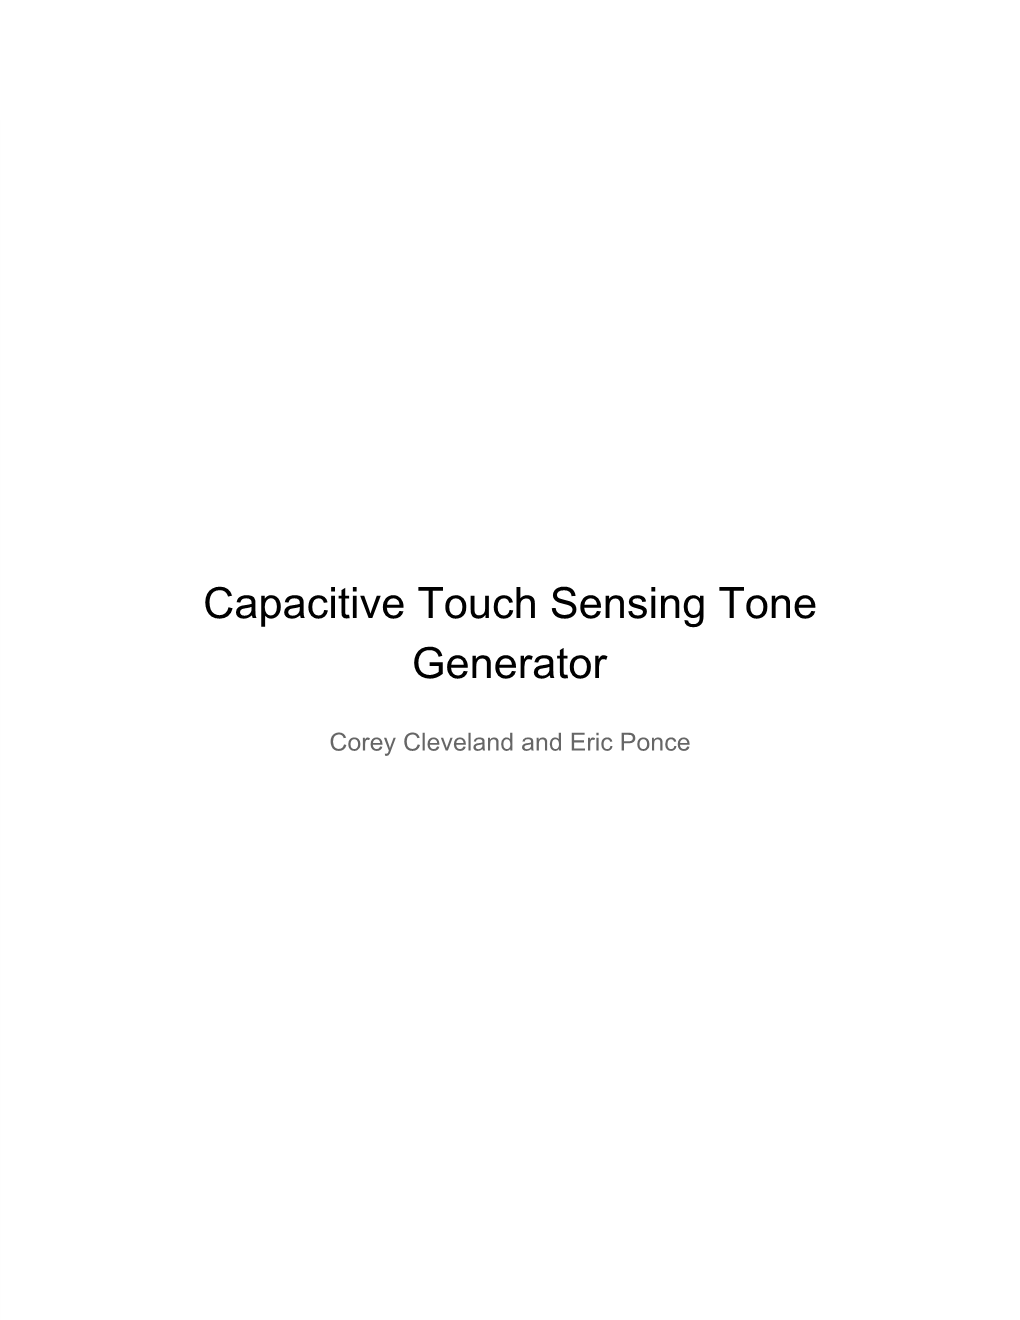 Capacitive Touch Sensing Tone Generator